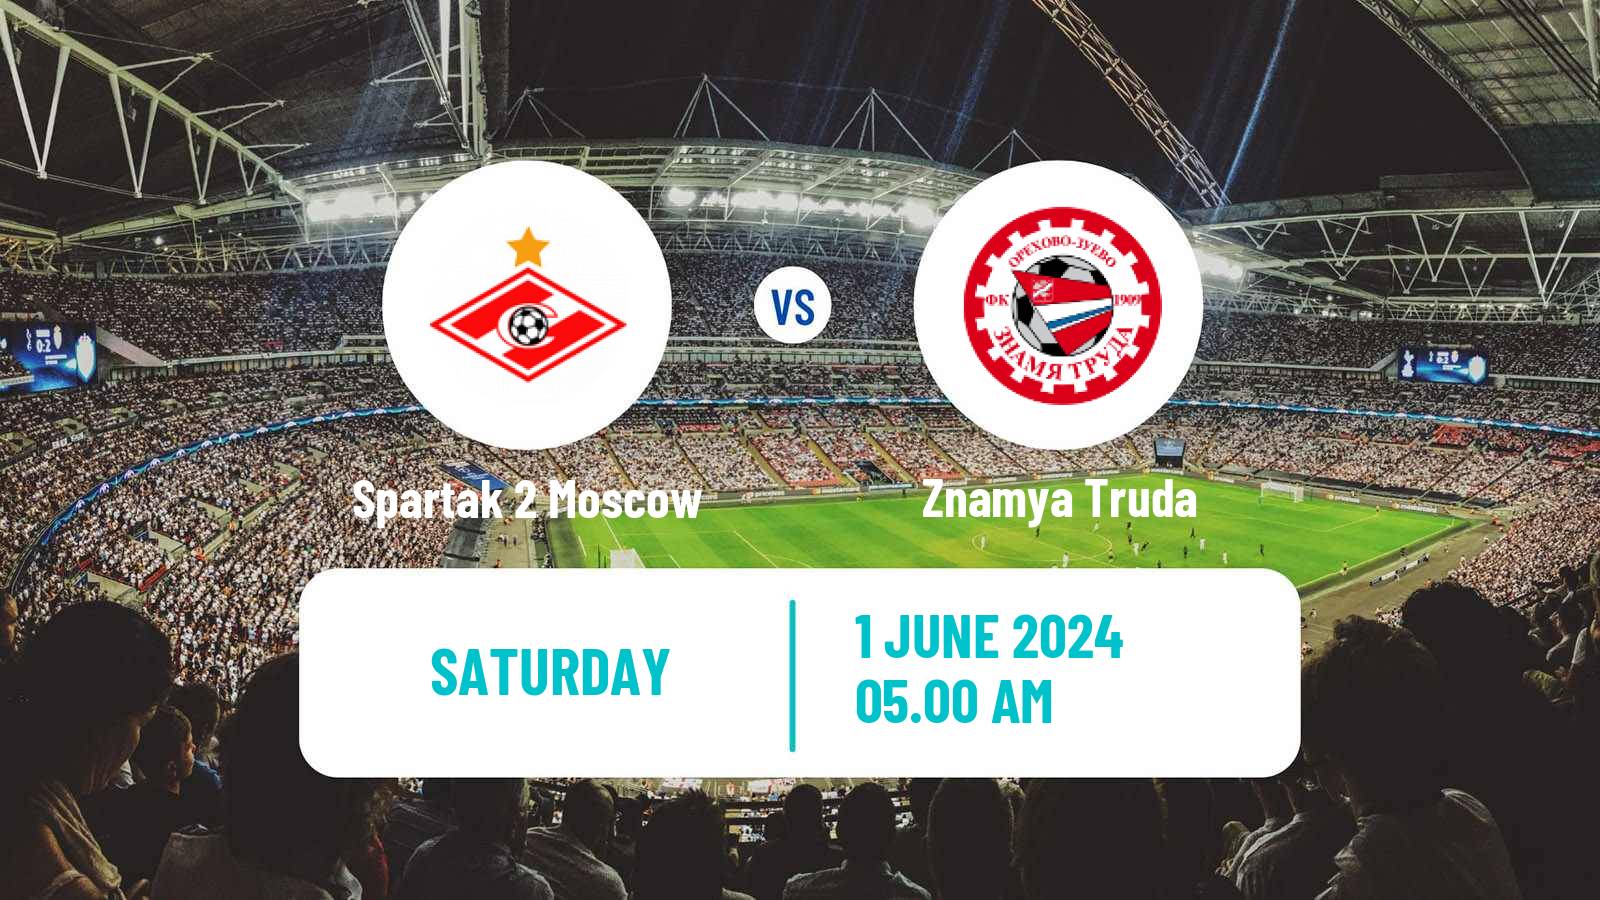 Soccer FNL 2 Division B Group 2 Spartak 2 Moscow - Znamya Truda